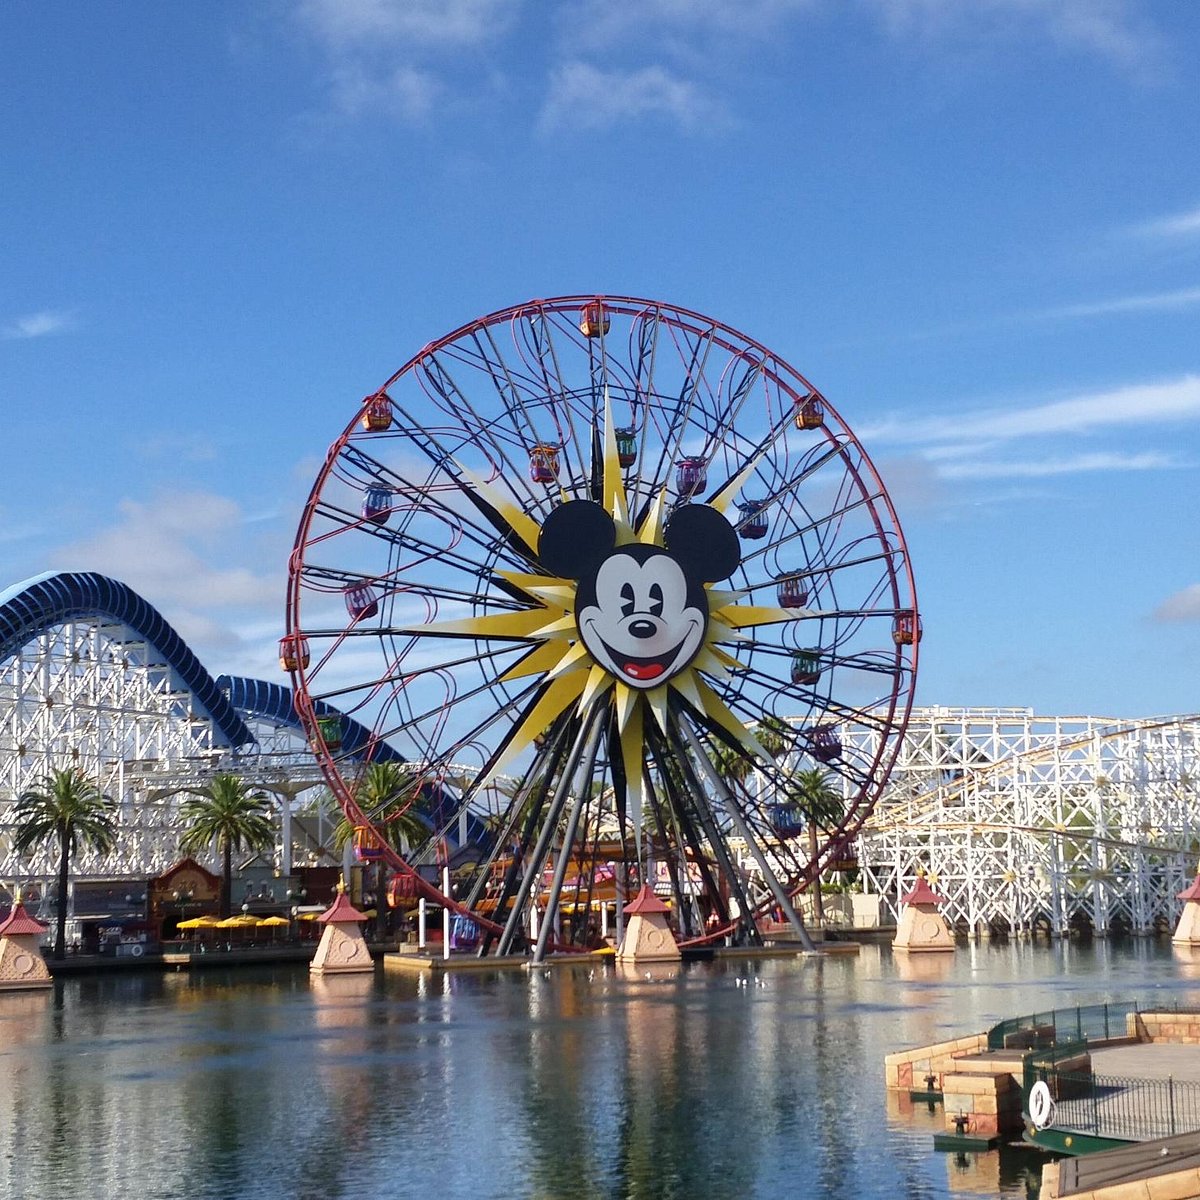 Disney's Happy Wheels : r/weirddalle